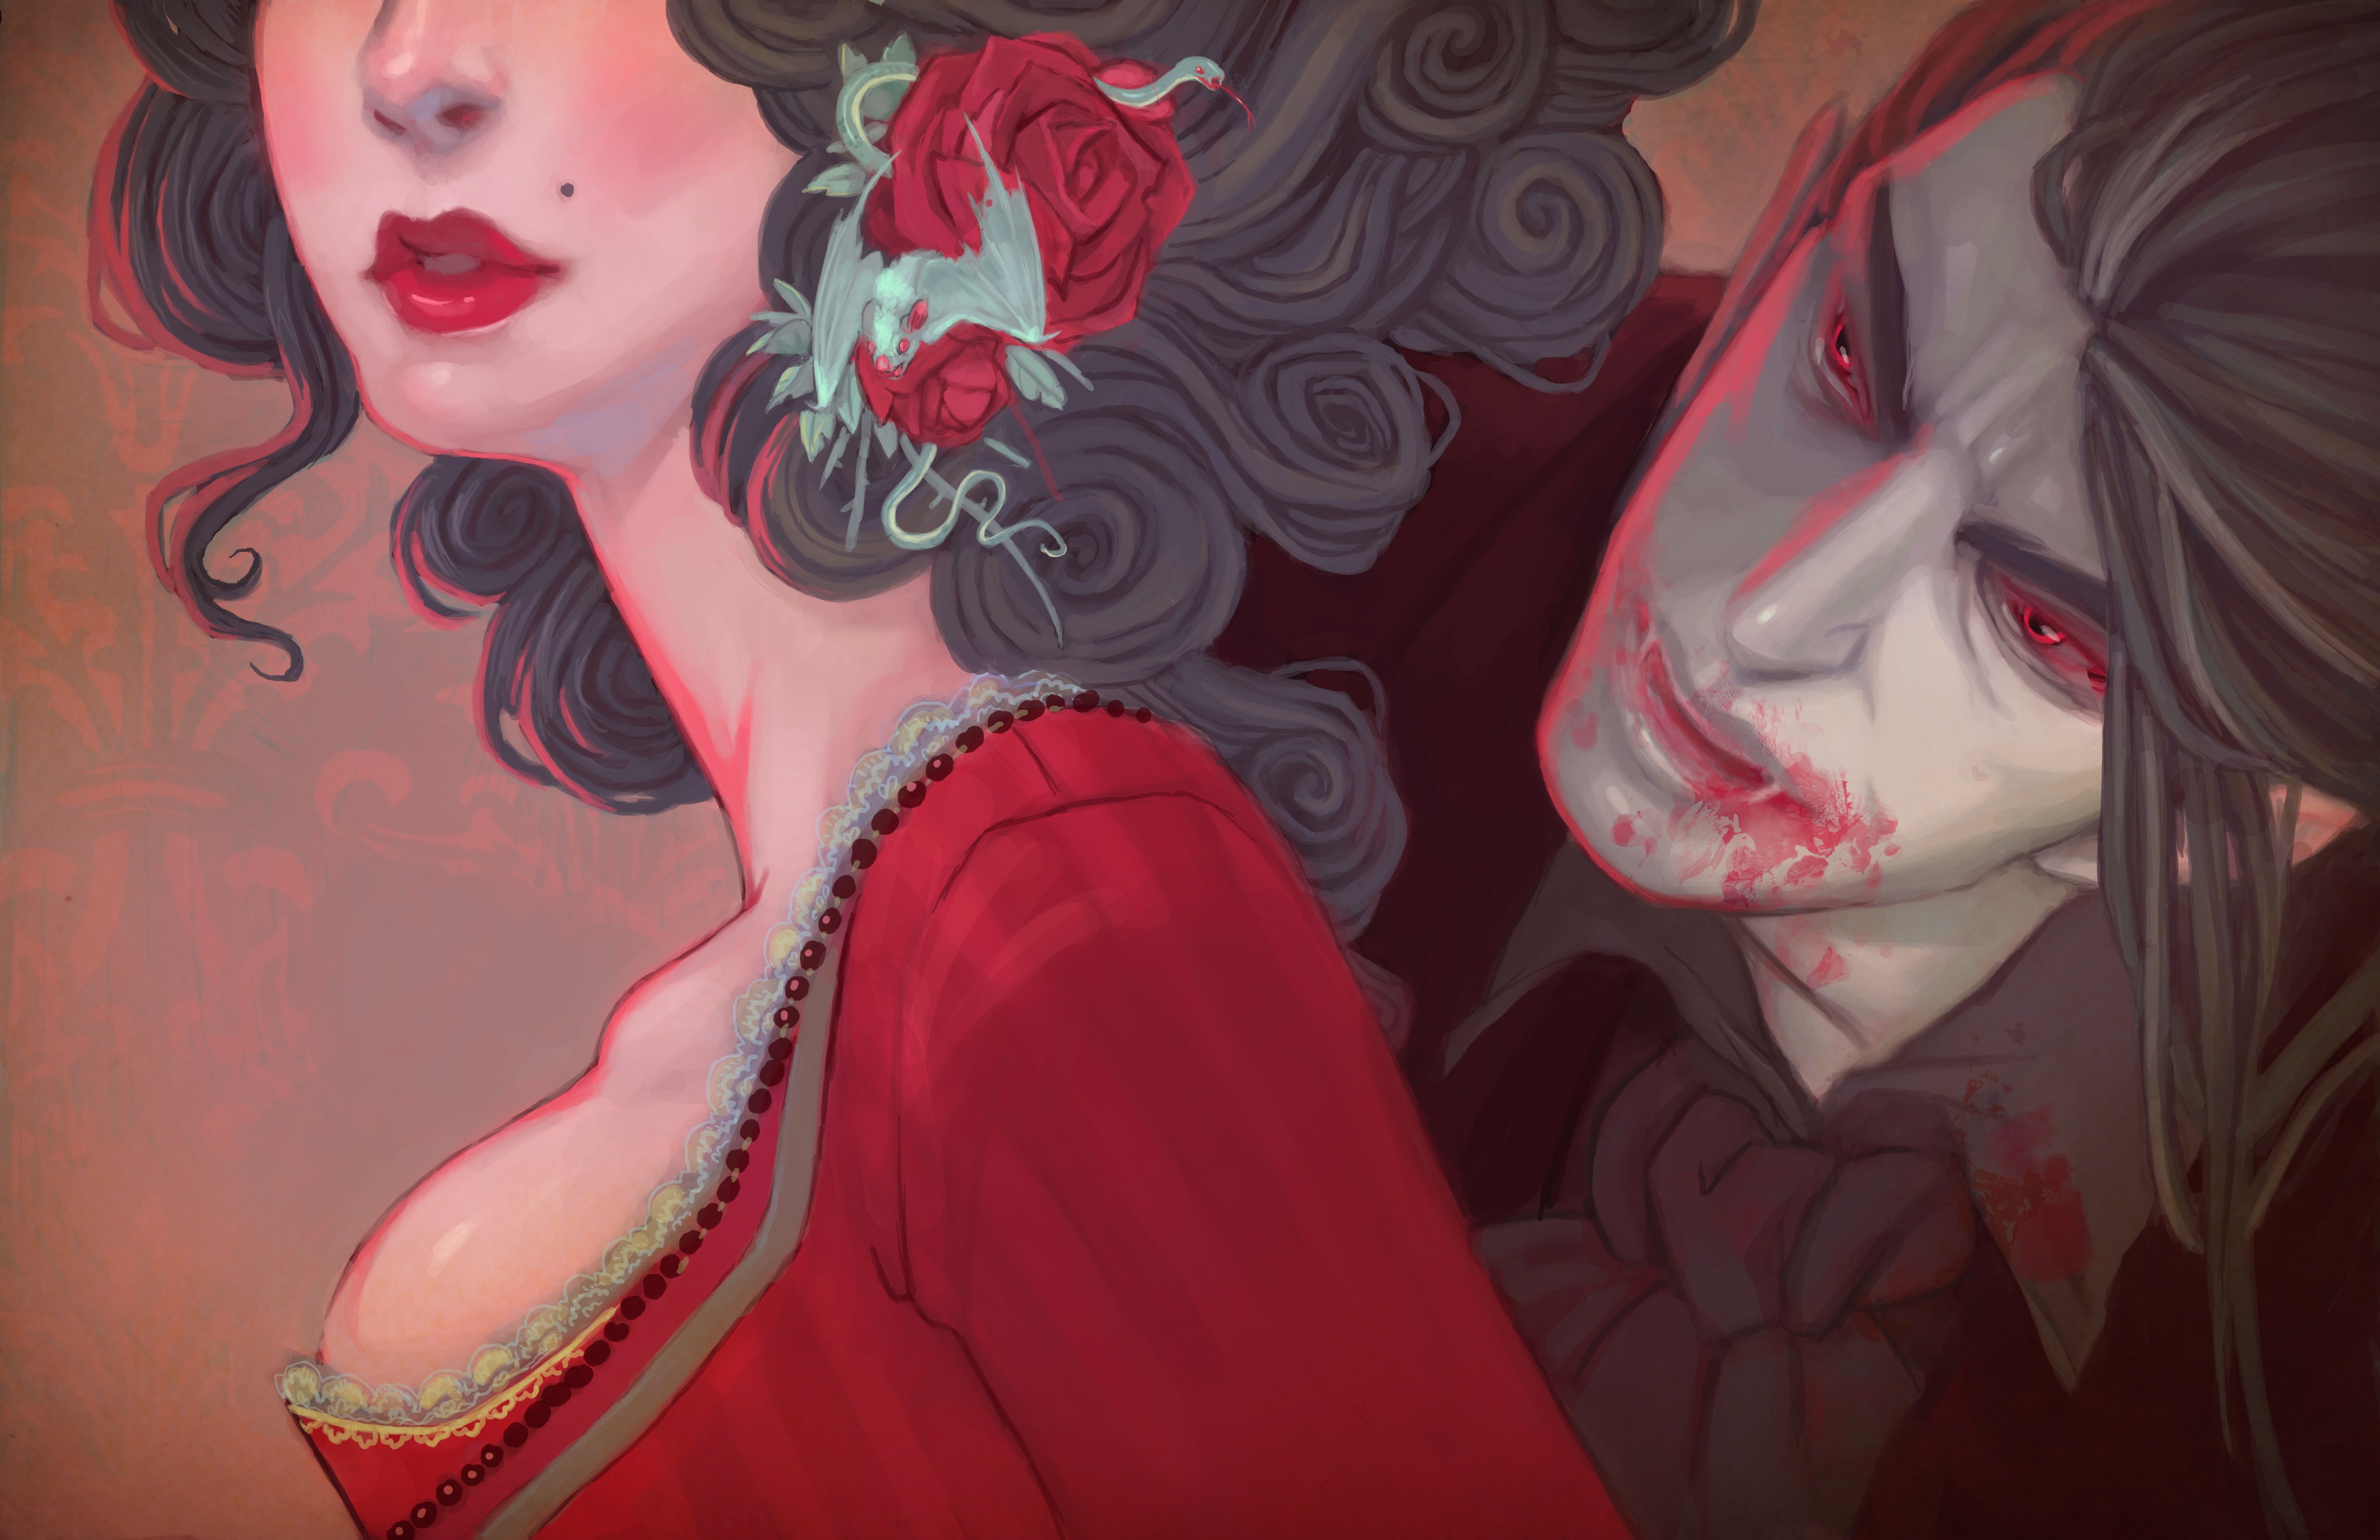 General 5100x3300 artwork vampires fantasy art blood fantasy girl flower in hair red eyes Dracula women men boobs red lipstick